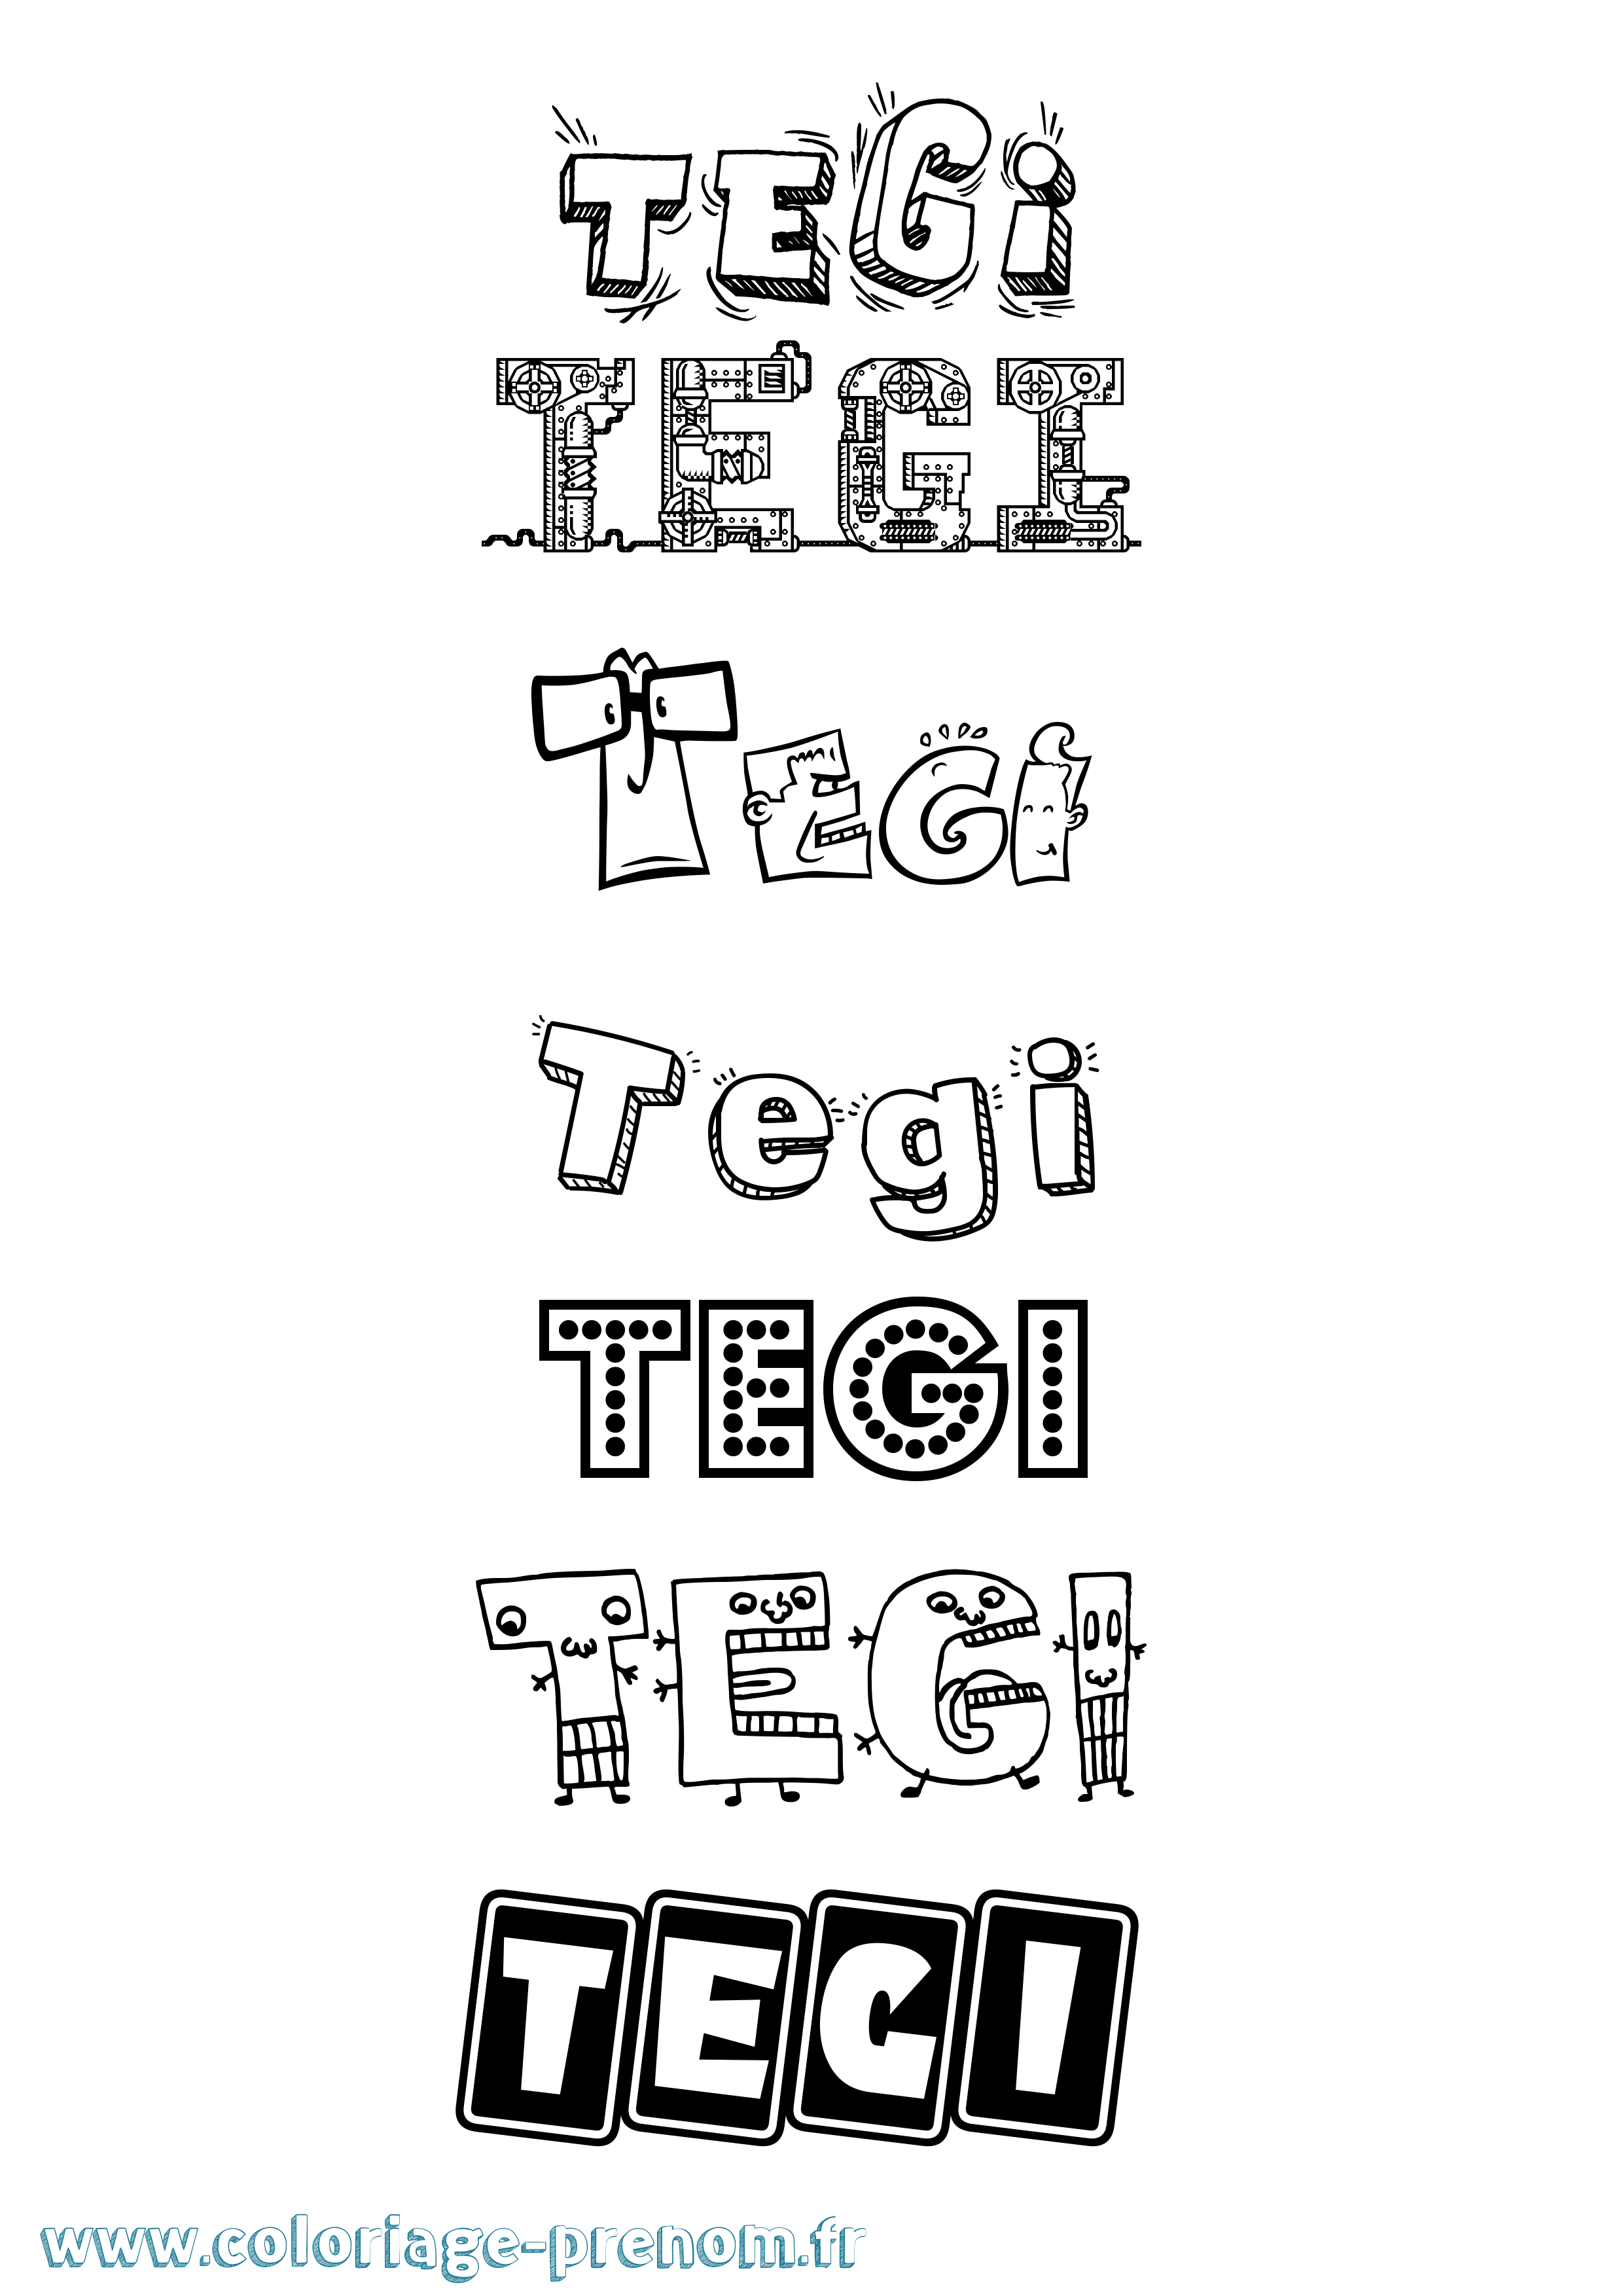 Coloriage prénom Tegi Fun